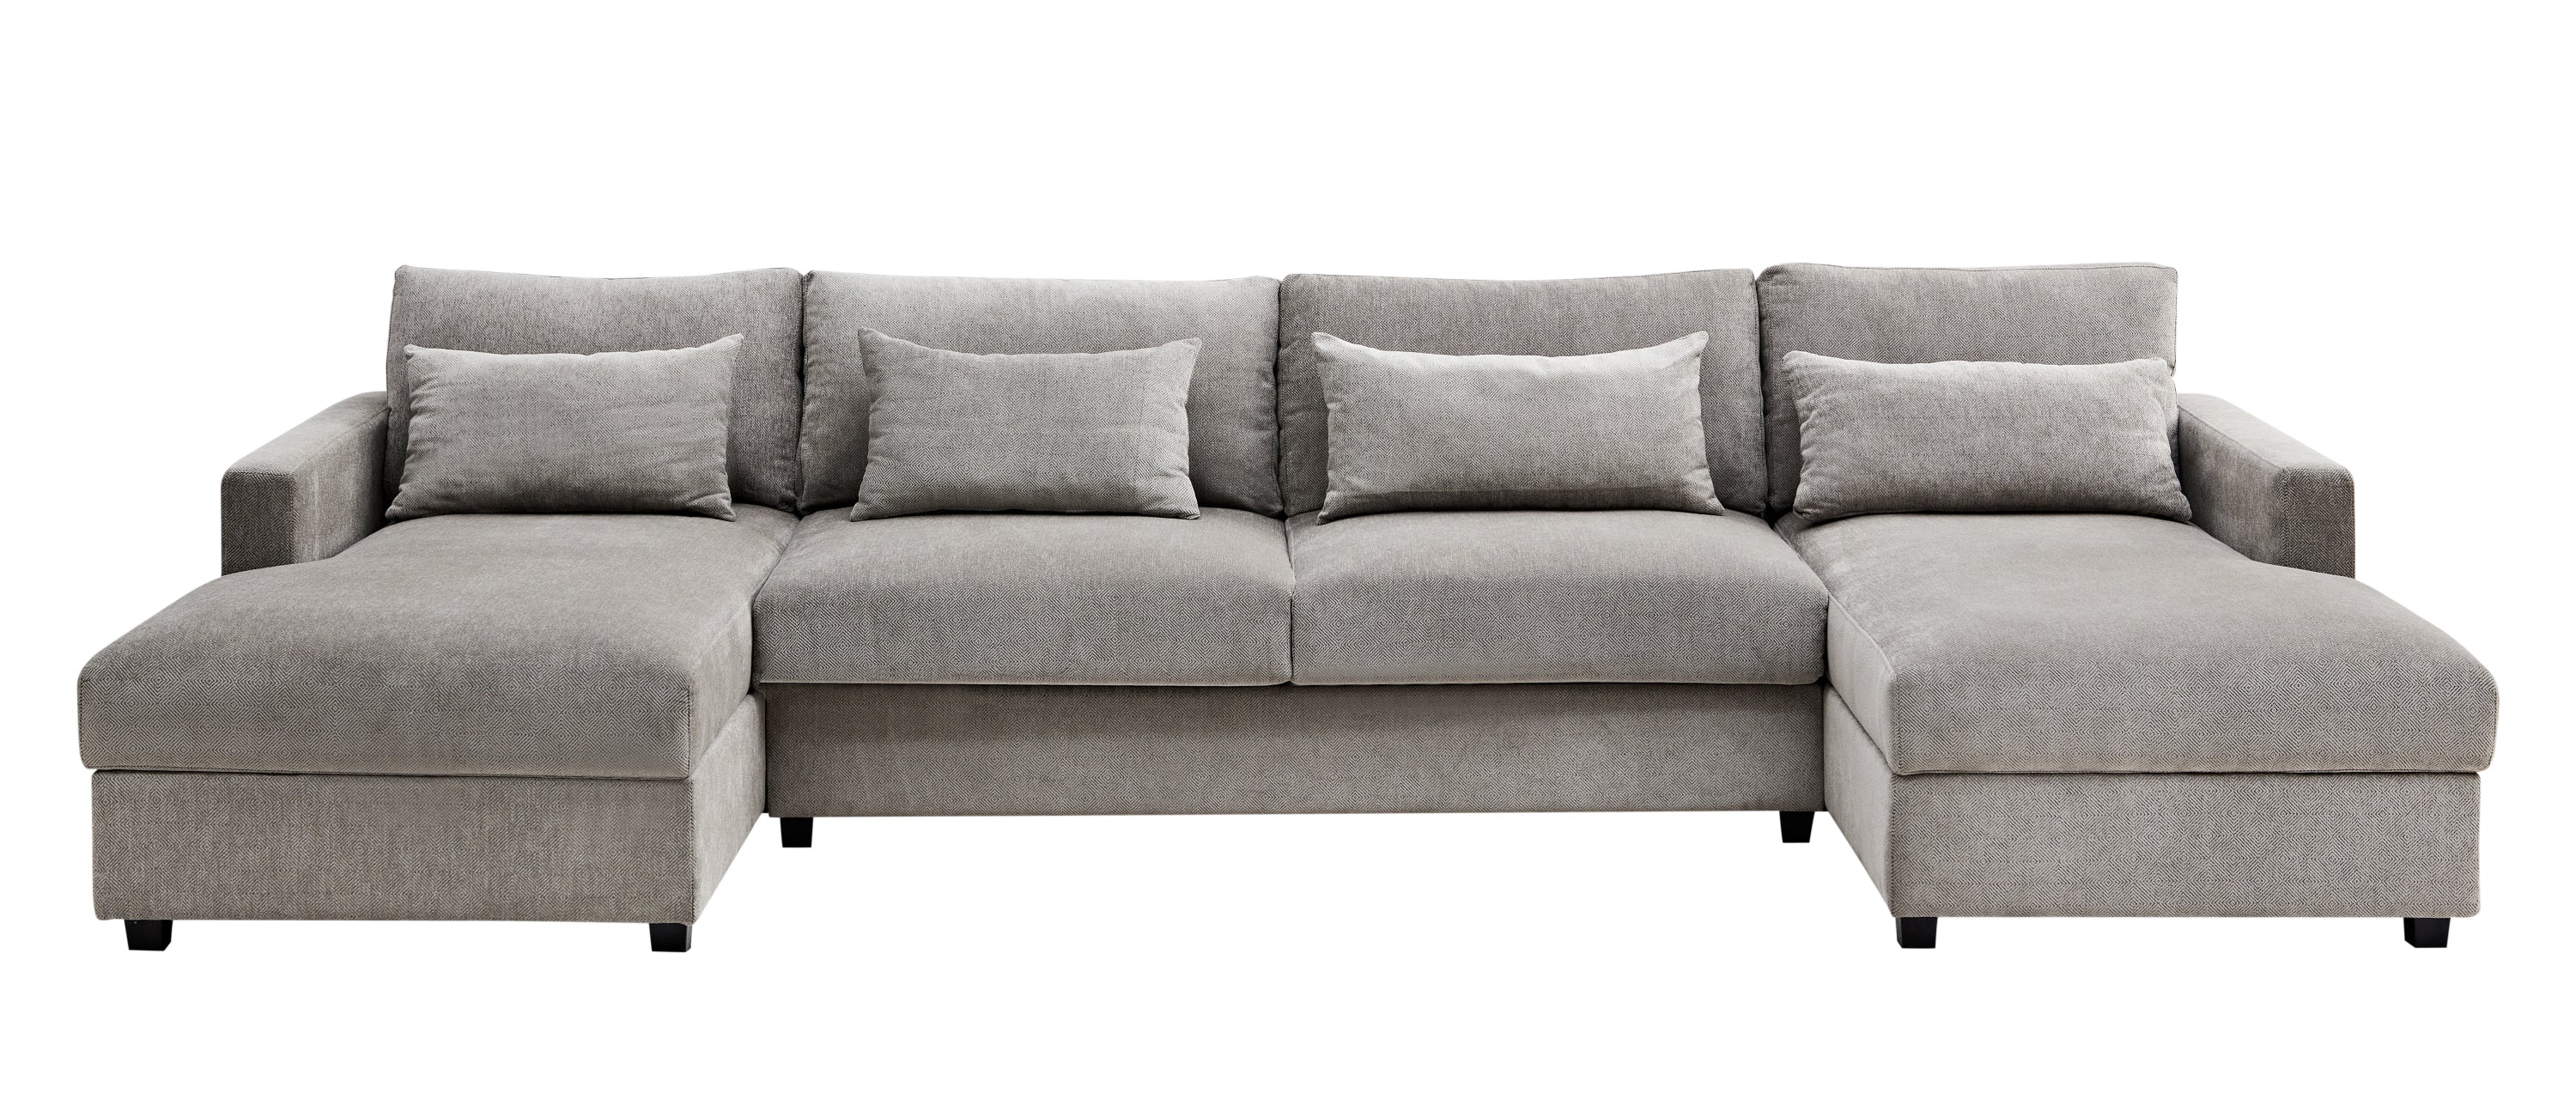 Modern Large U-Shape Sectional Sofa: 2 Large Chaise, Storage, 4 Lumbar Pillows - Gray